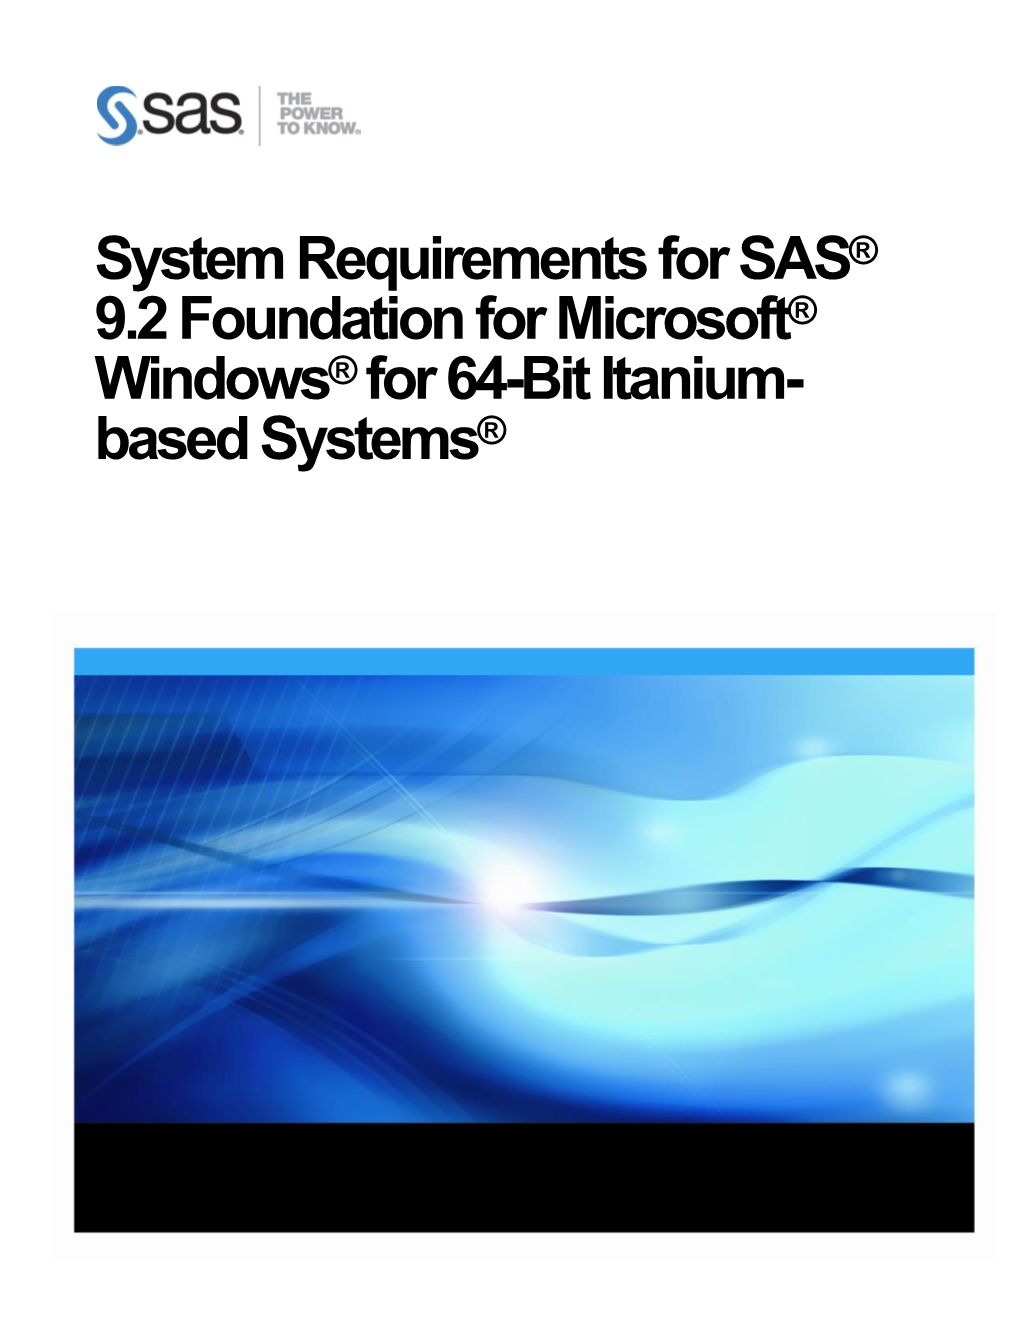 SAS 9.2 Foundation for Microsoft Windows for 64-Bit Itanium-Based Systems, Cary, NC: SAS Institute Inc., 2010